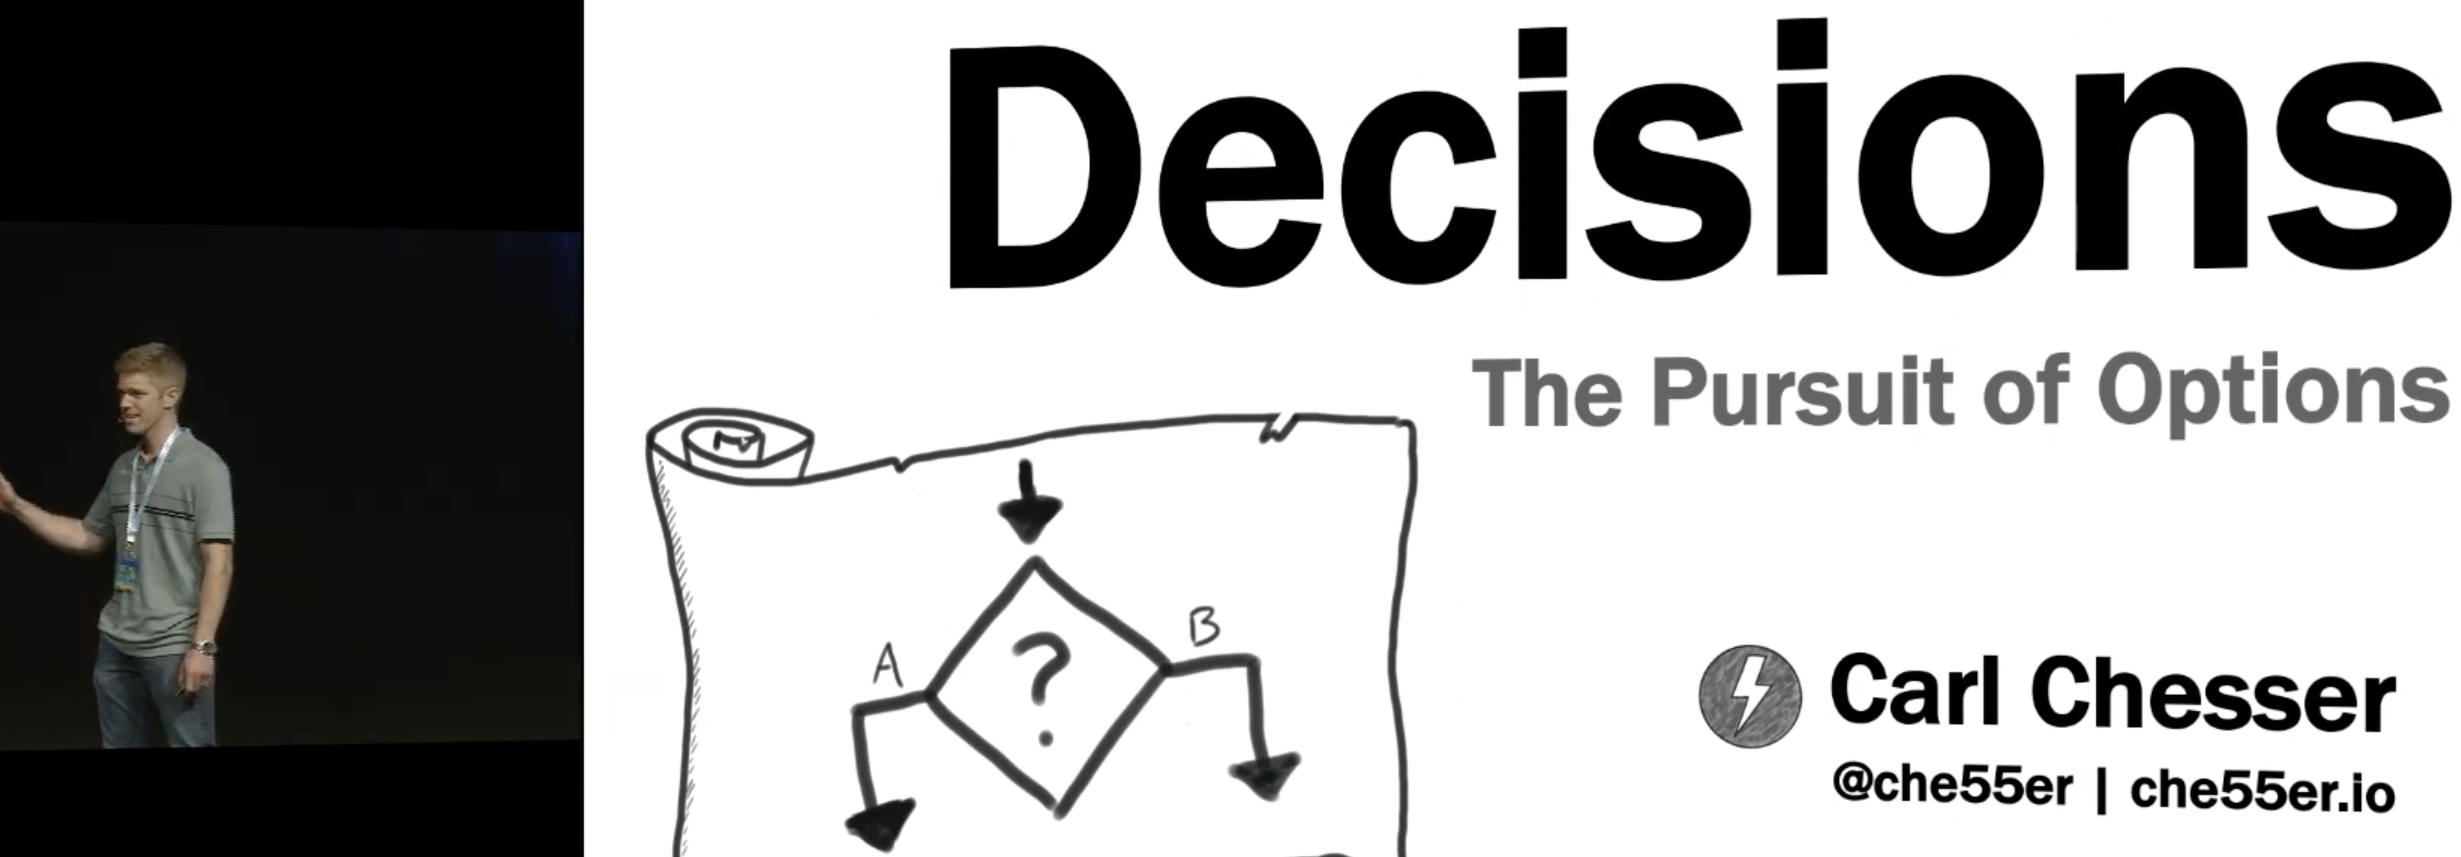 /talks/decisions-the-pursuit-of-options/decisions-the-pursuit-of-options.png